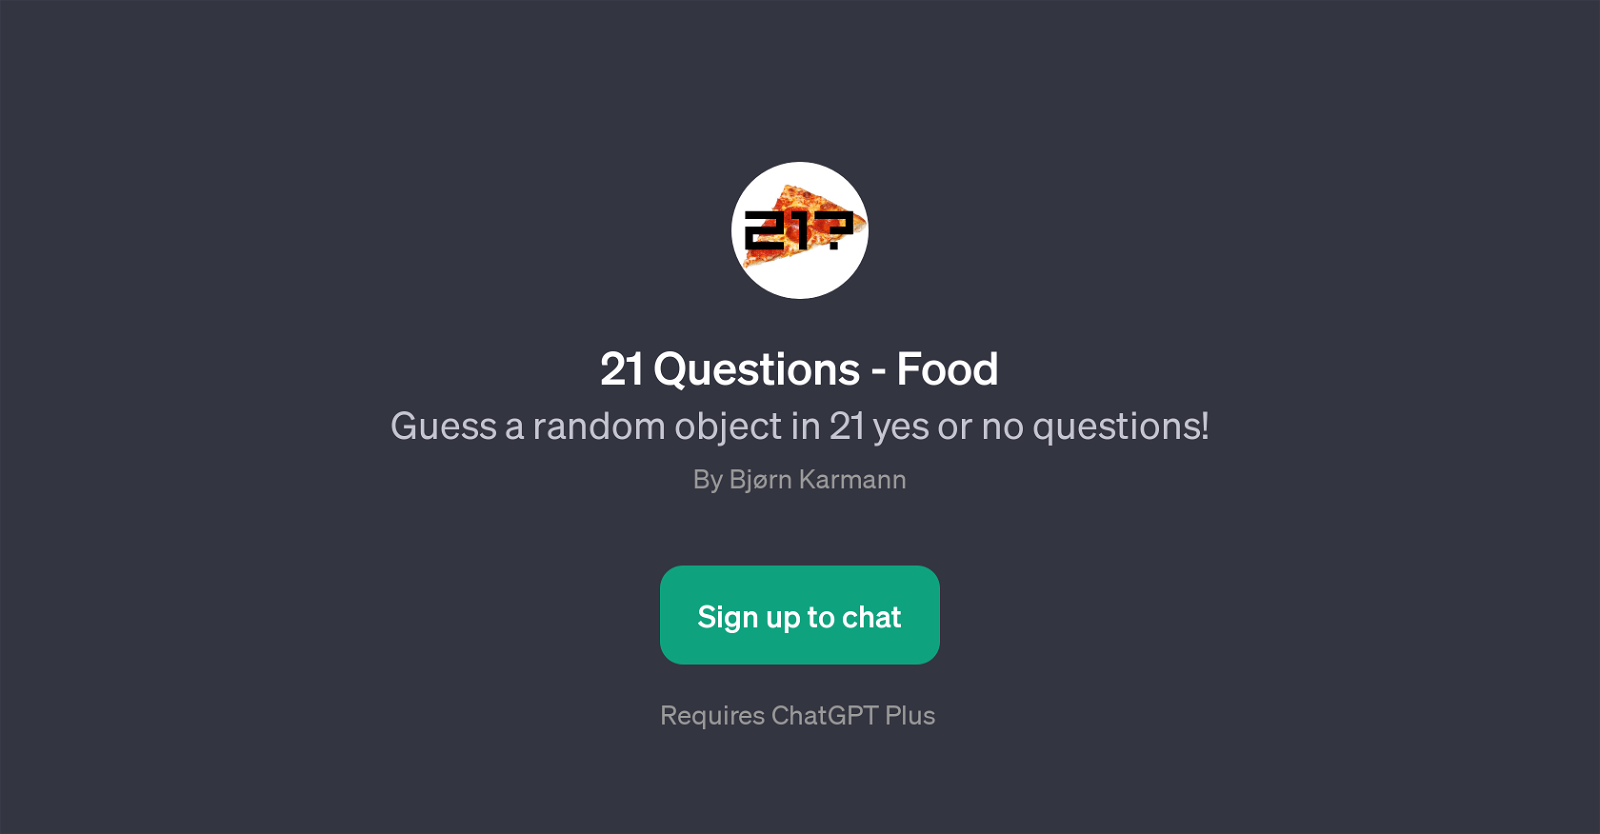 21 Questions - Food website